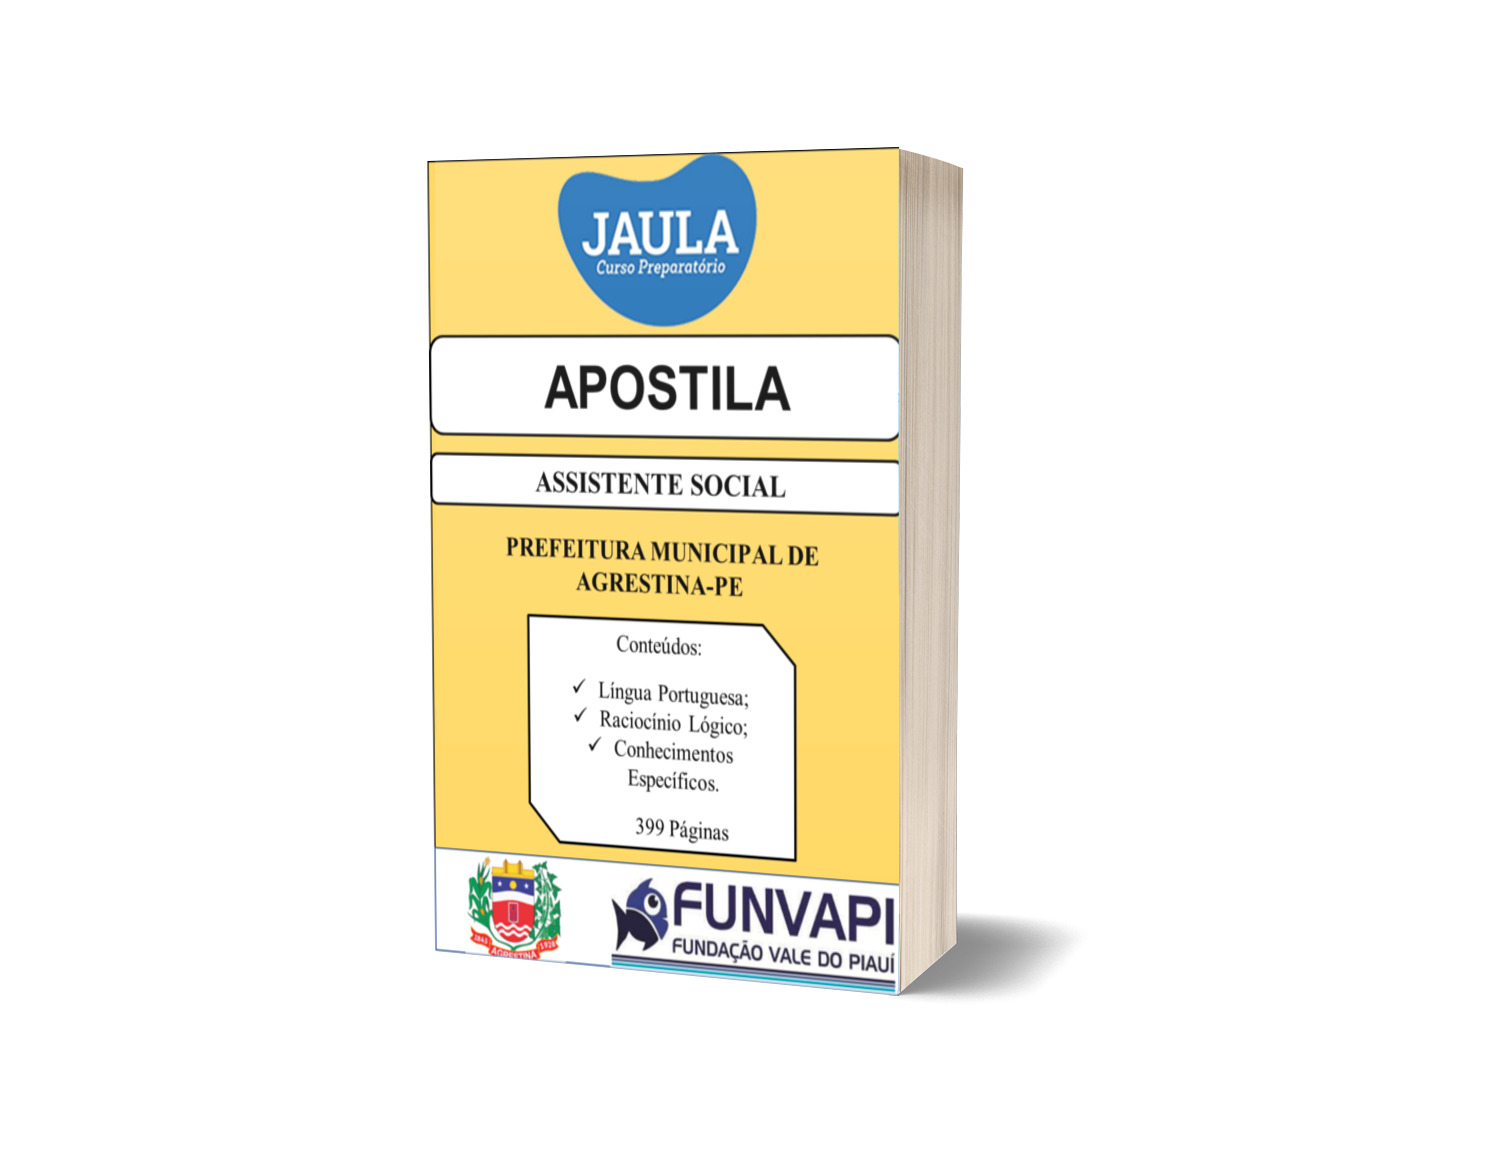 APOSTILA/ASSISTENTE SOCIAL/AGRESTINA-PE